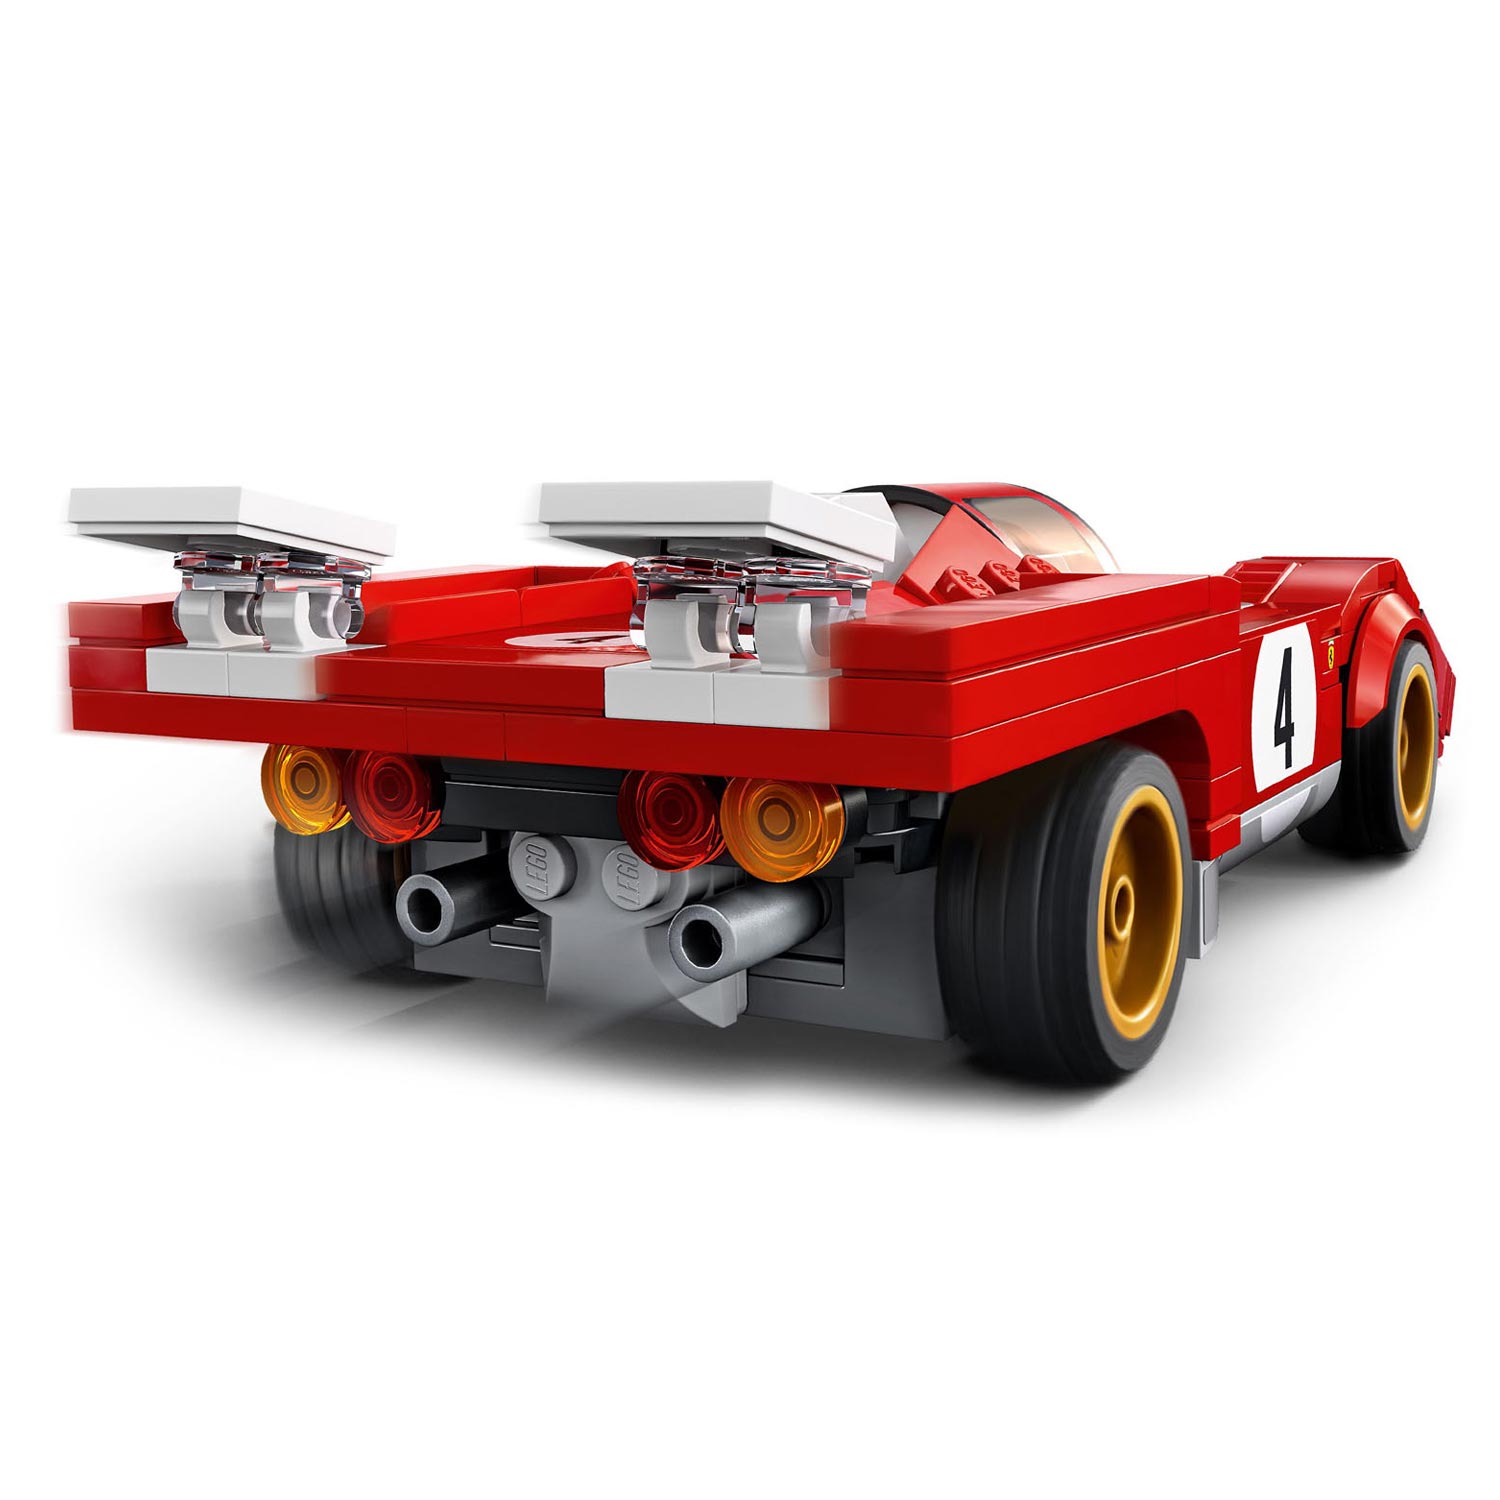 LEGO Speed ​​​​Champions 76906 Ferrari 512 M